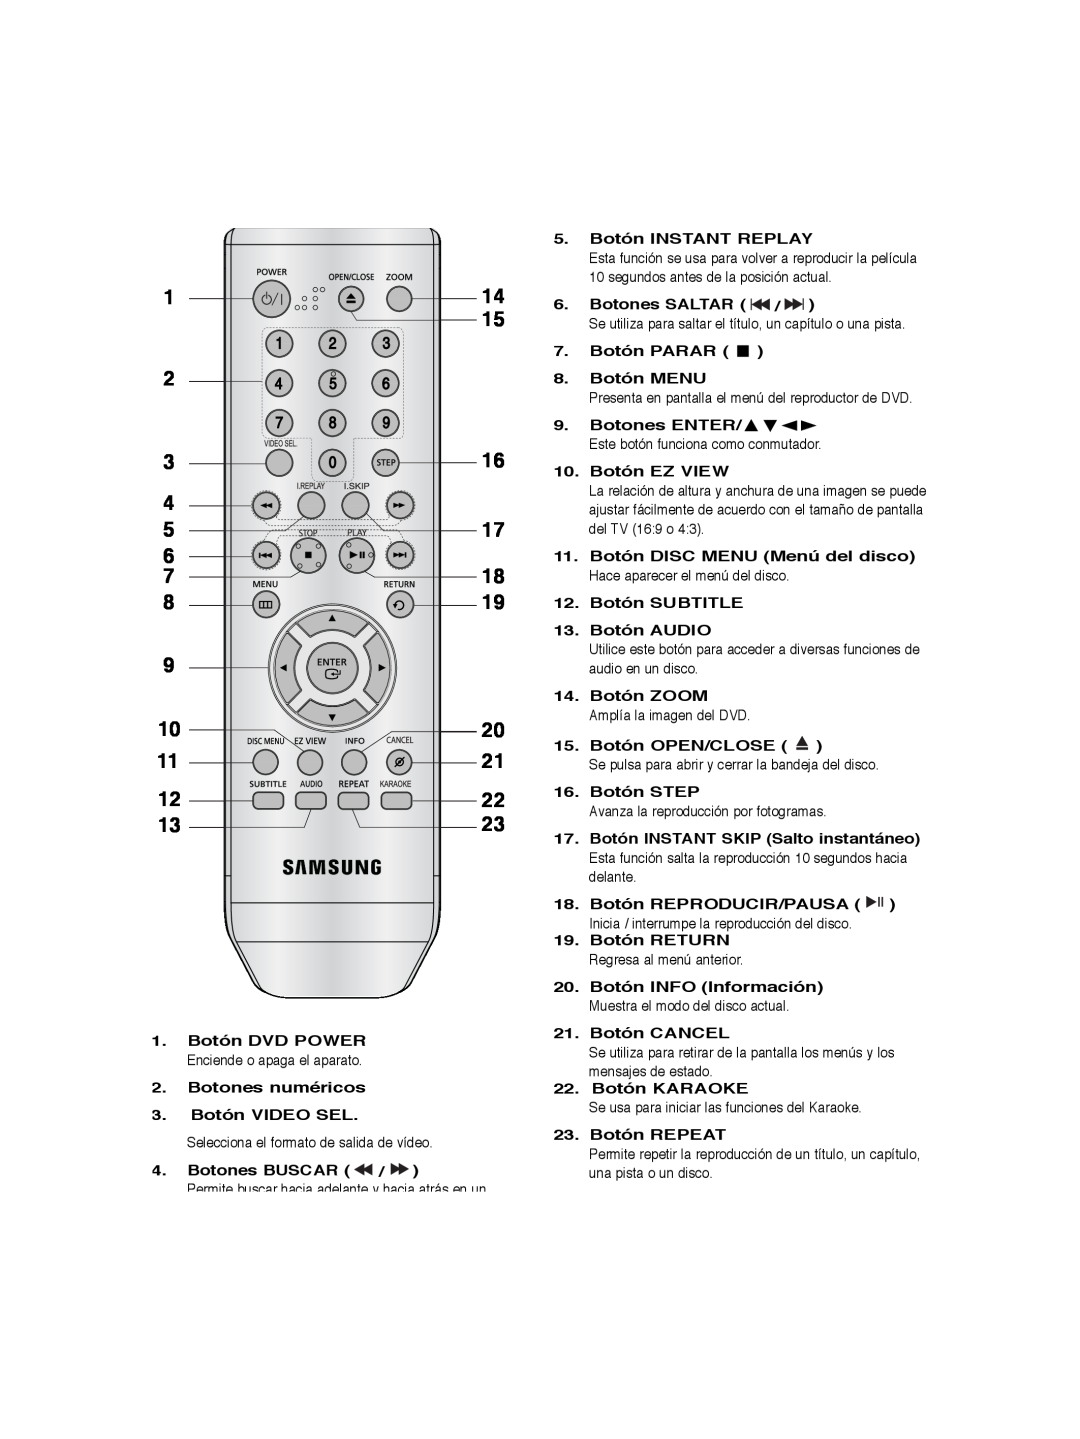 Samsung DVD-P260K/AFR manual Botones numéricos 3. Botón VIDEO SEL, Botones BUSCAR, Botón INSTANT REPLAY, Botones SALTAR 